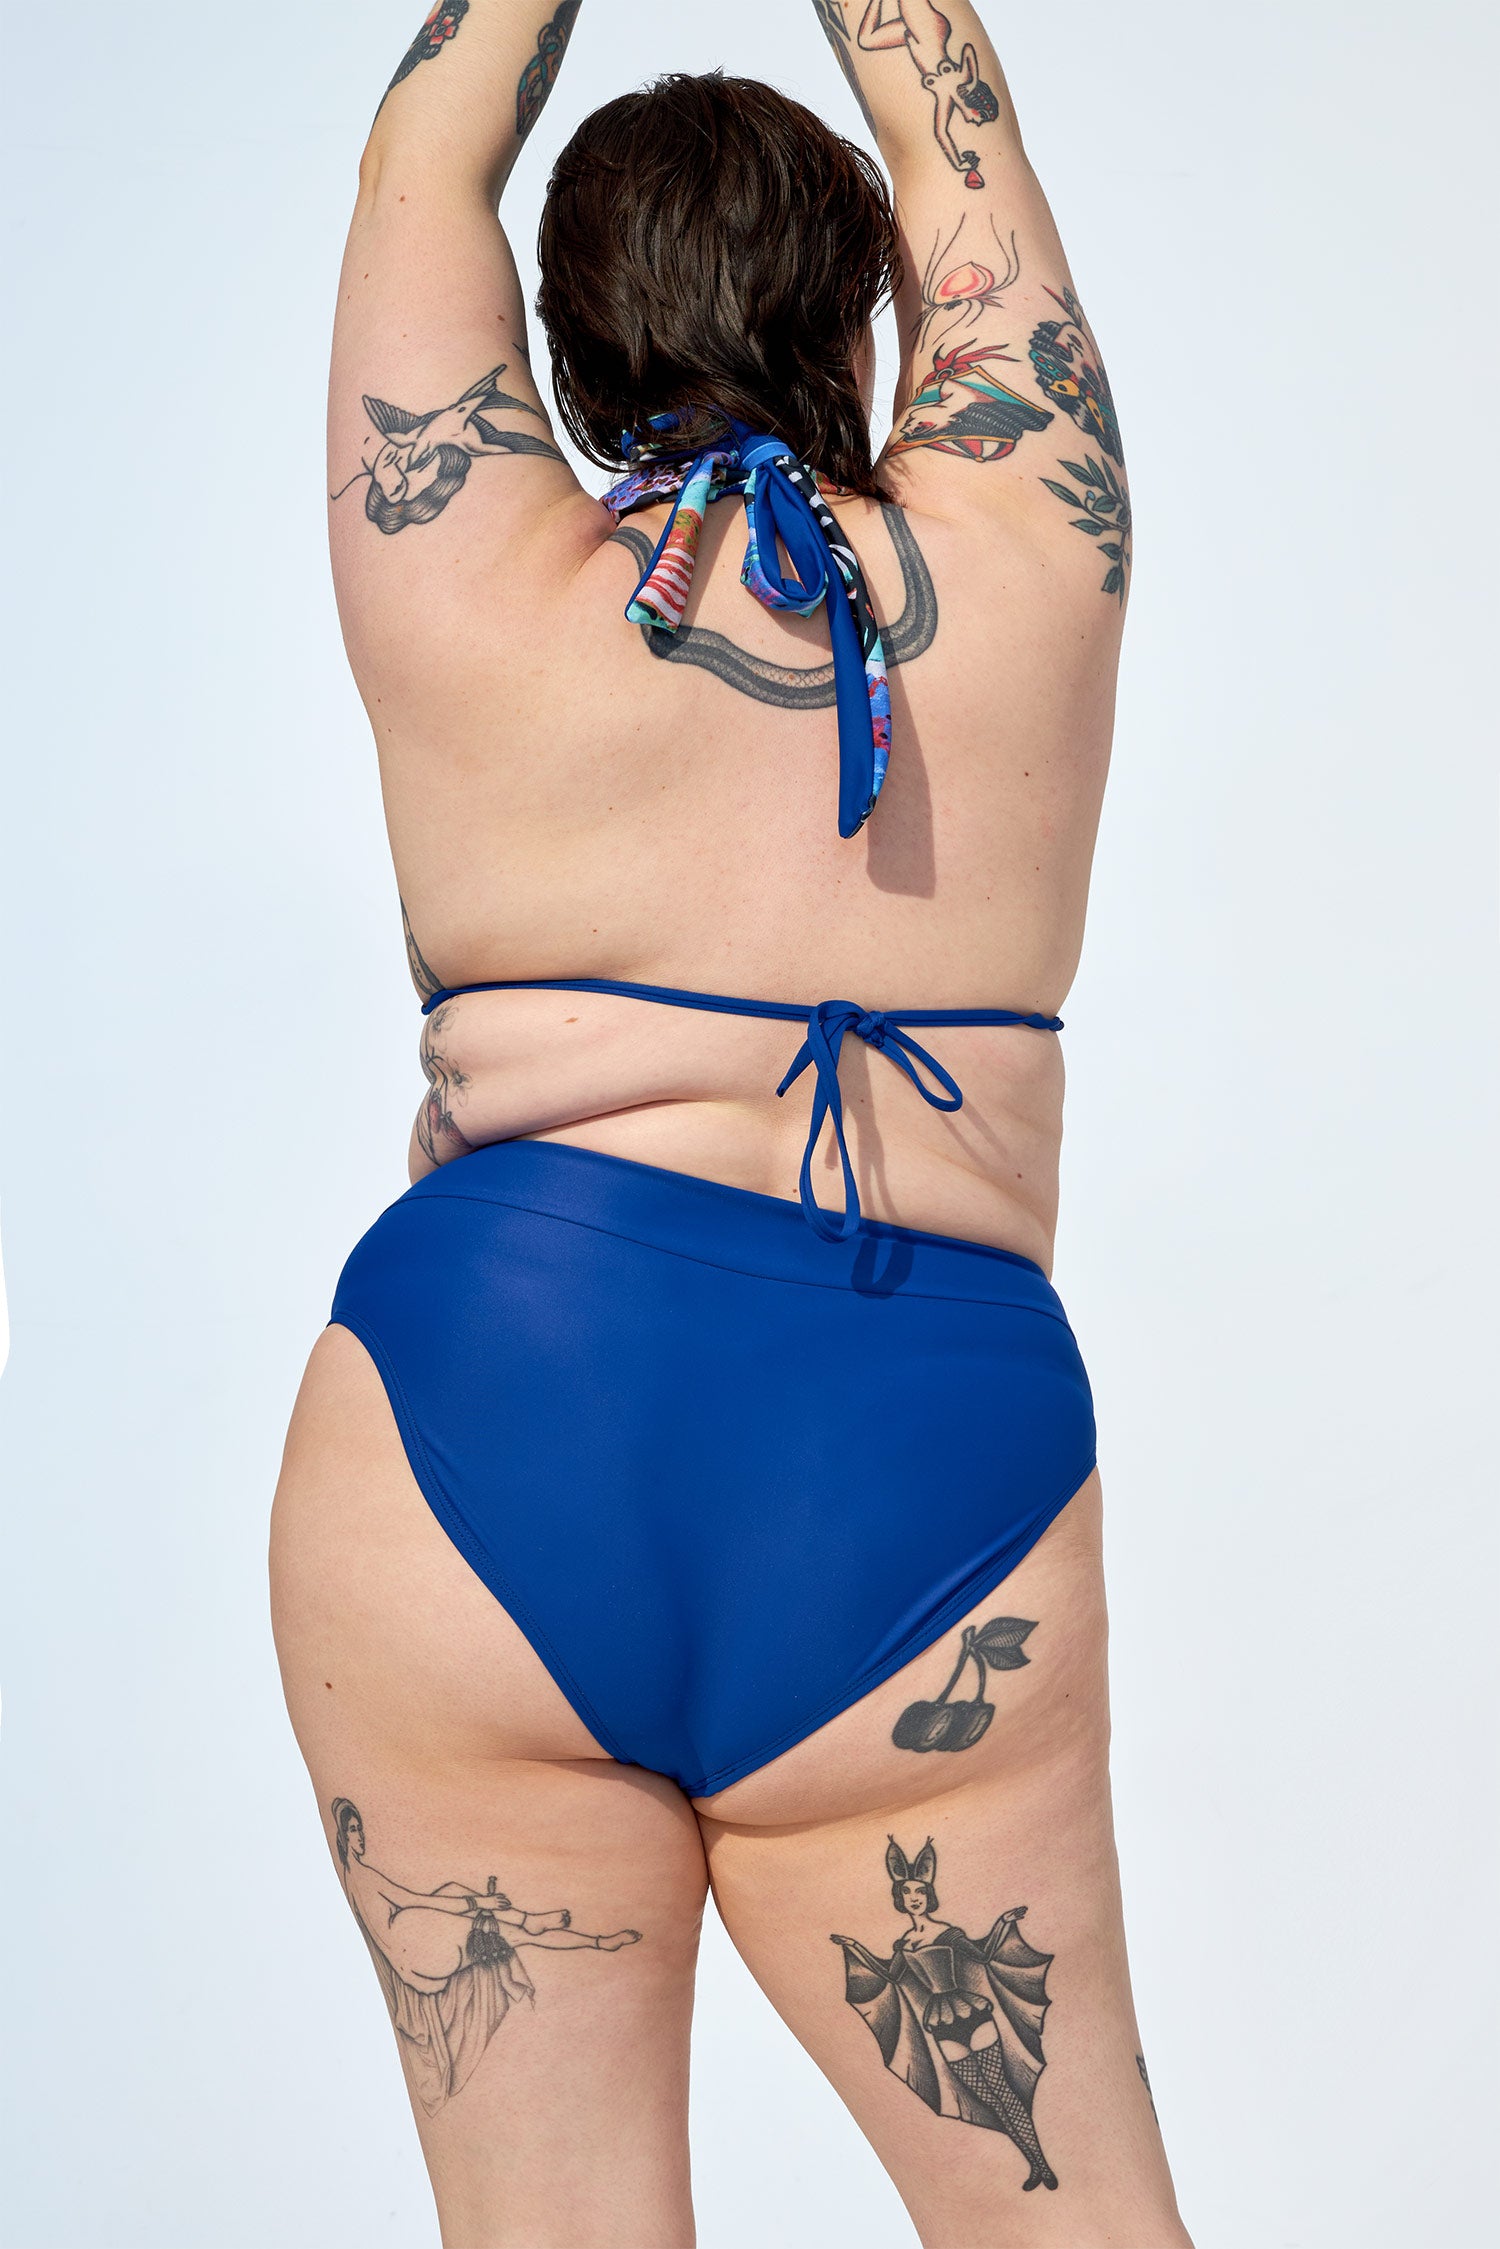 ANALIE – High waist bikini bottom in Navy blue